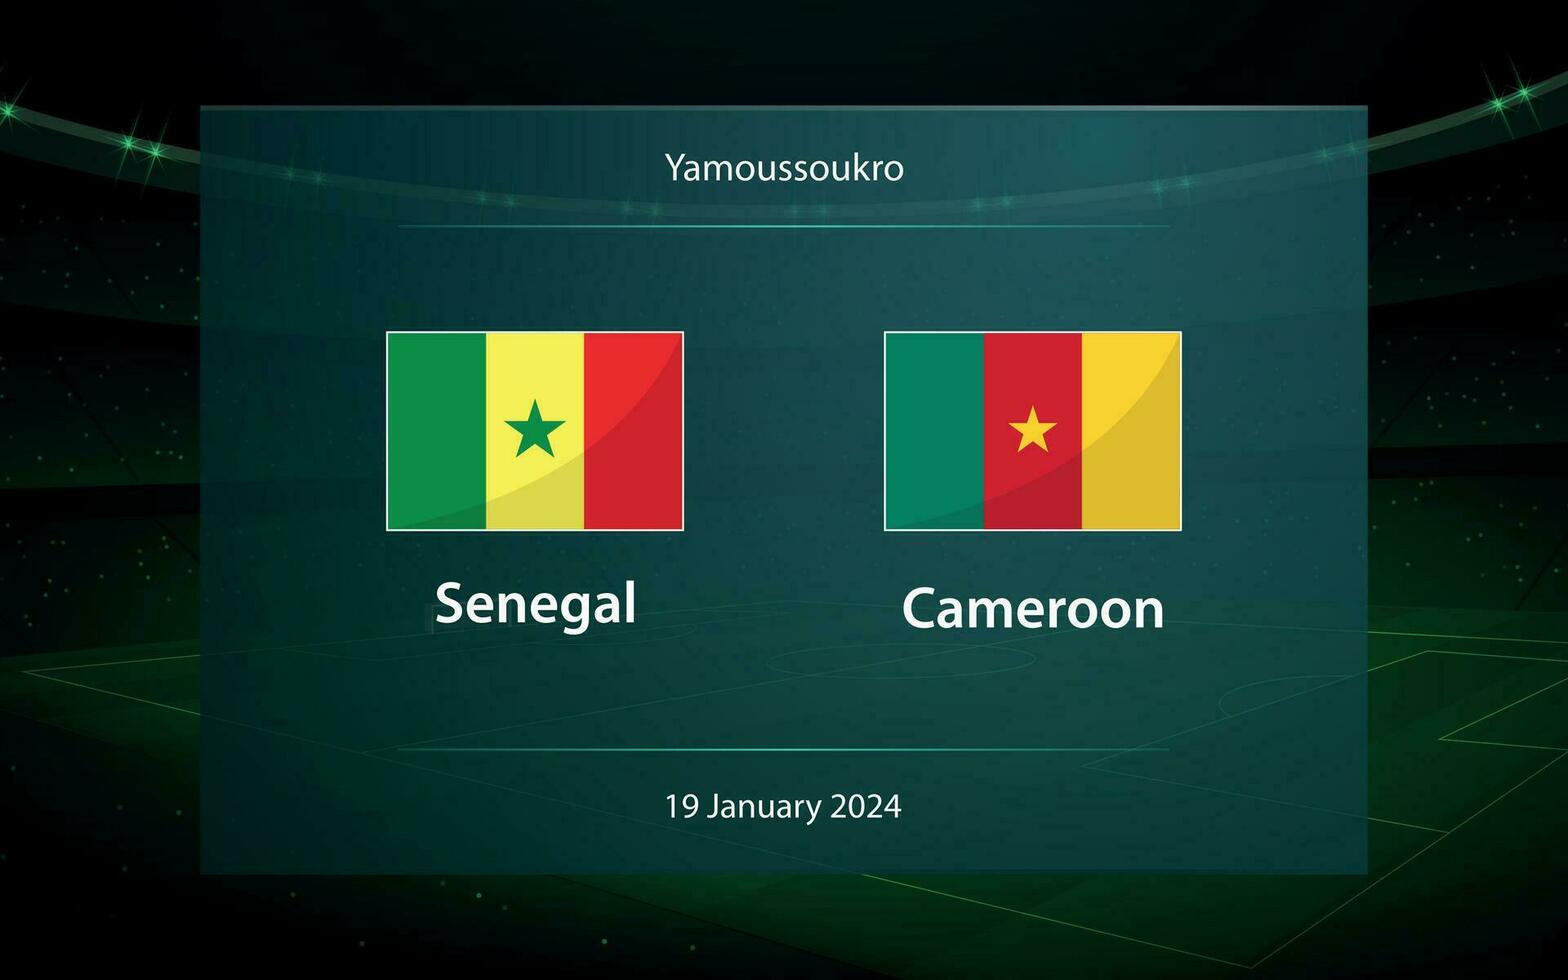 Senegal vs Cameroon. Football scoreboard broadcast graphic vector